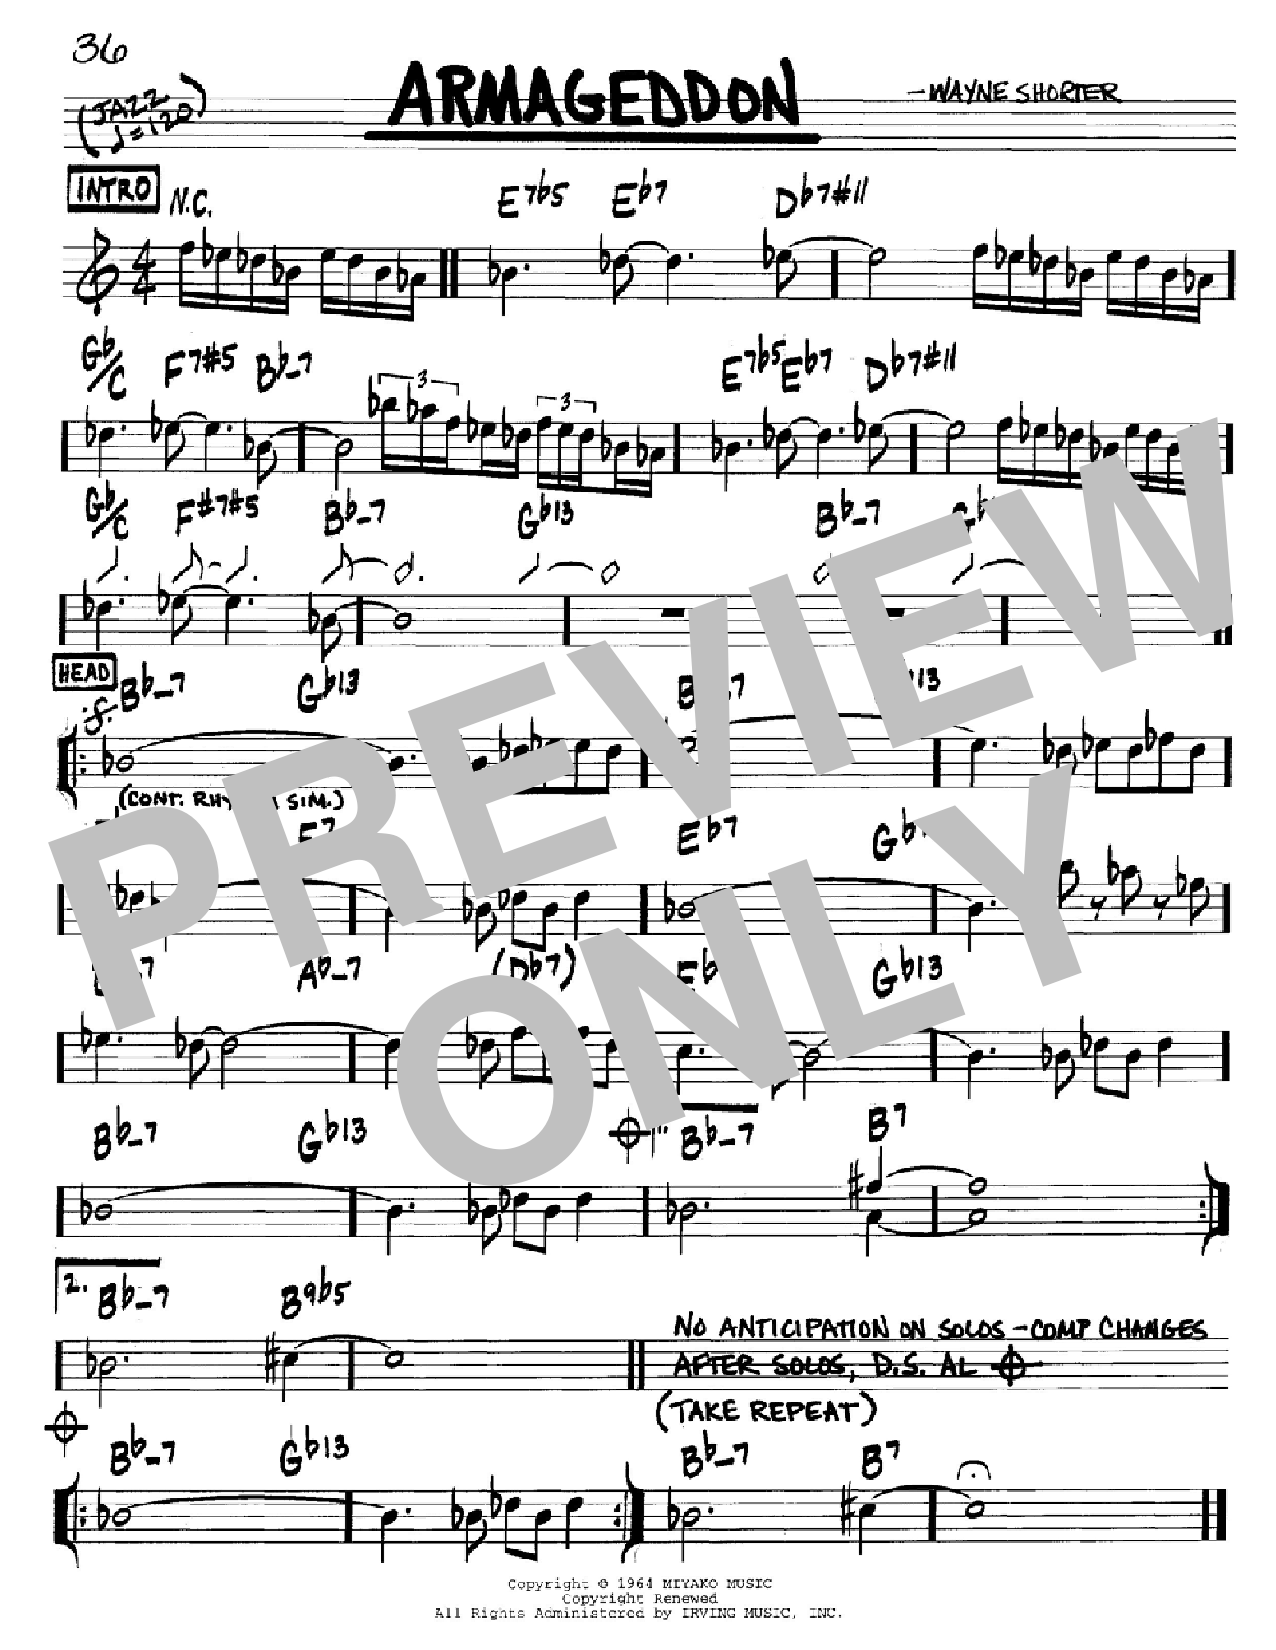 Wayne Shorter Armageddon Sheet Music Notes & Chords for Real Book - Melody & Chords - C Instruments - Download or Print PDF